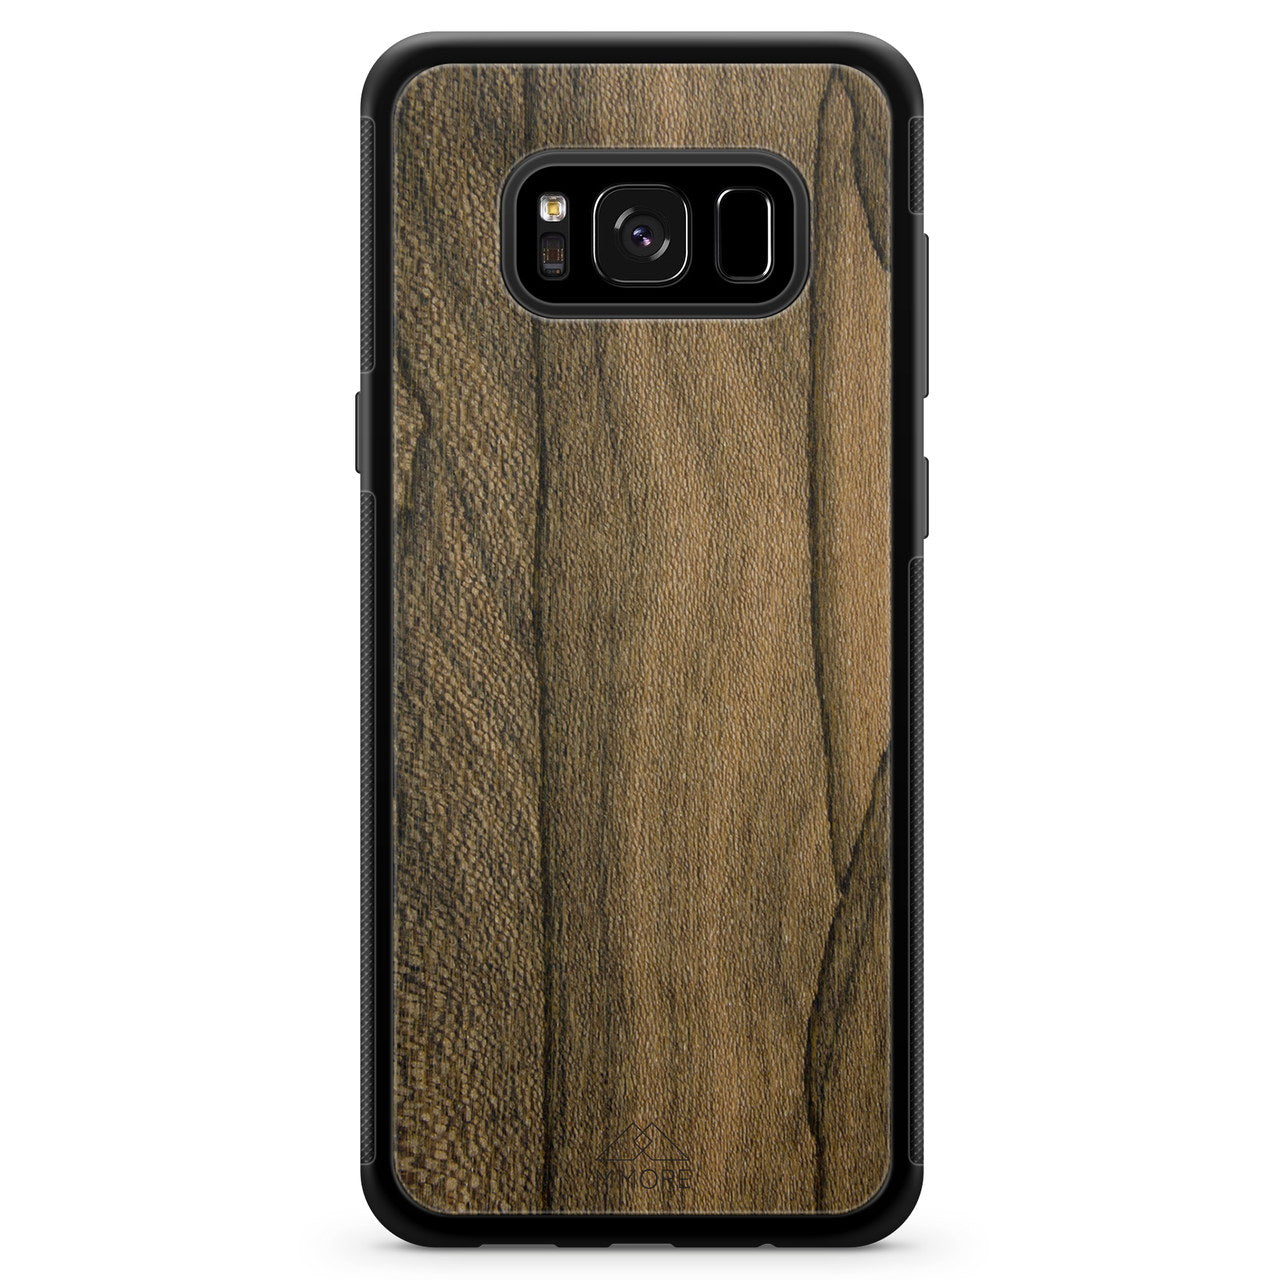  Ziricote Wood Samsung S8 Phone Case 